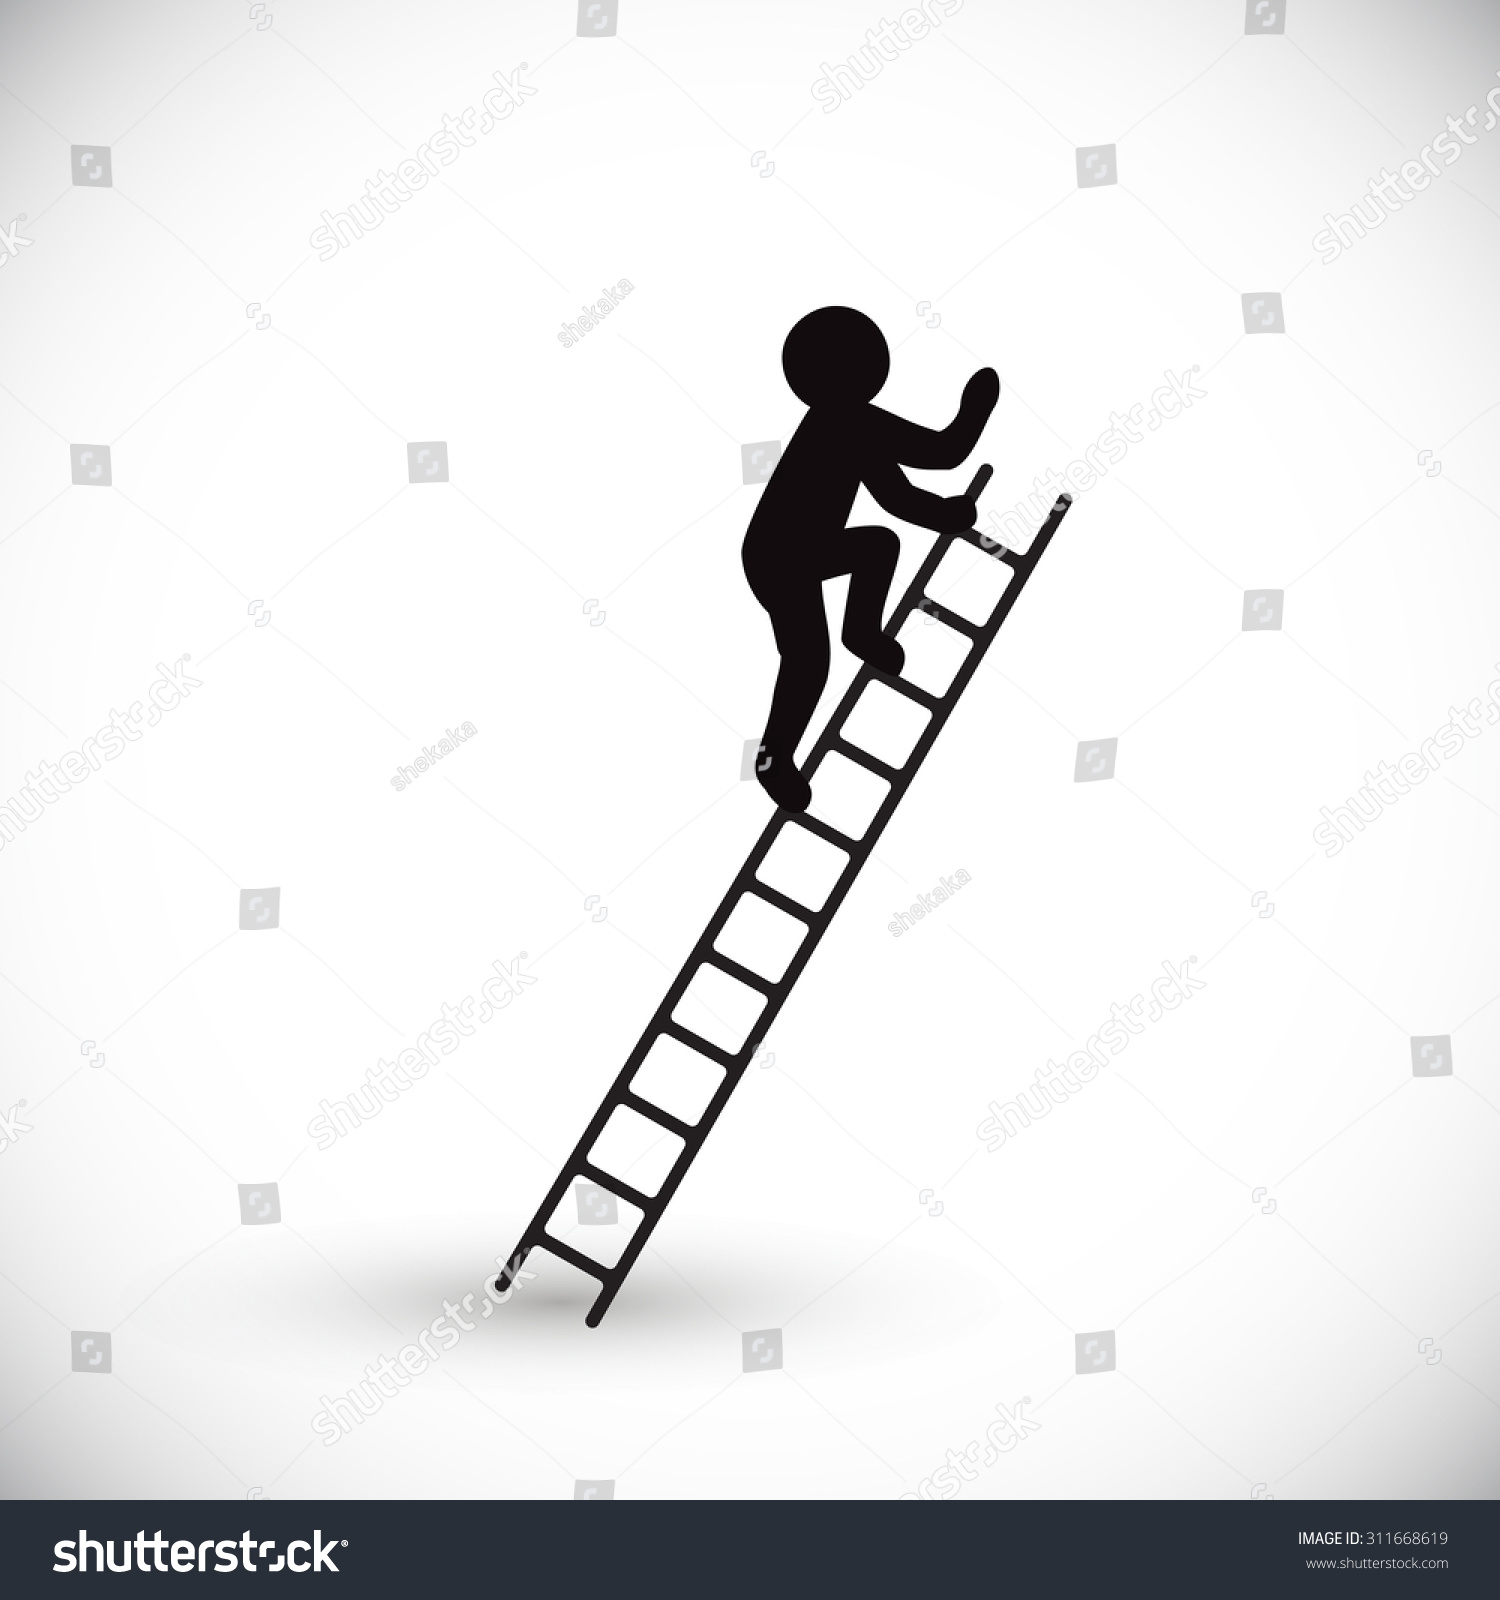 clipart man climbing stairs - photo #31